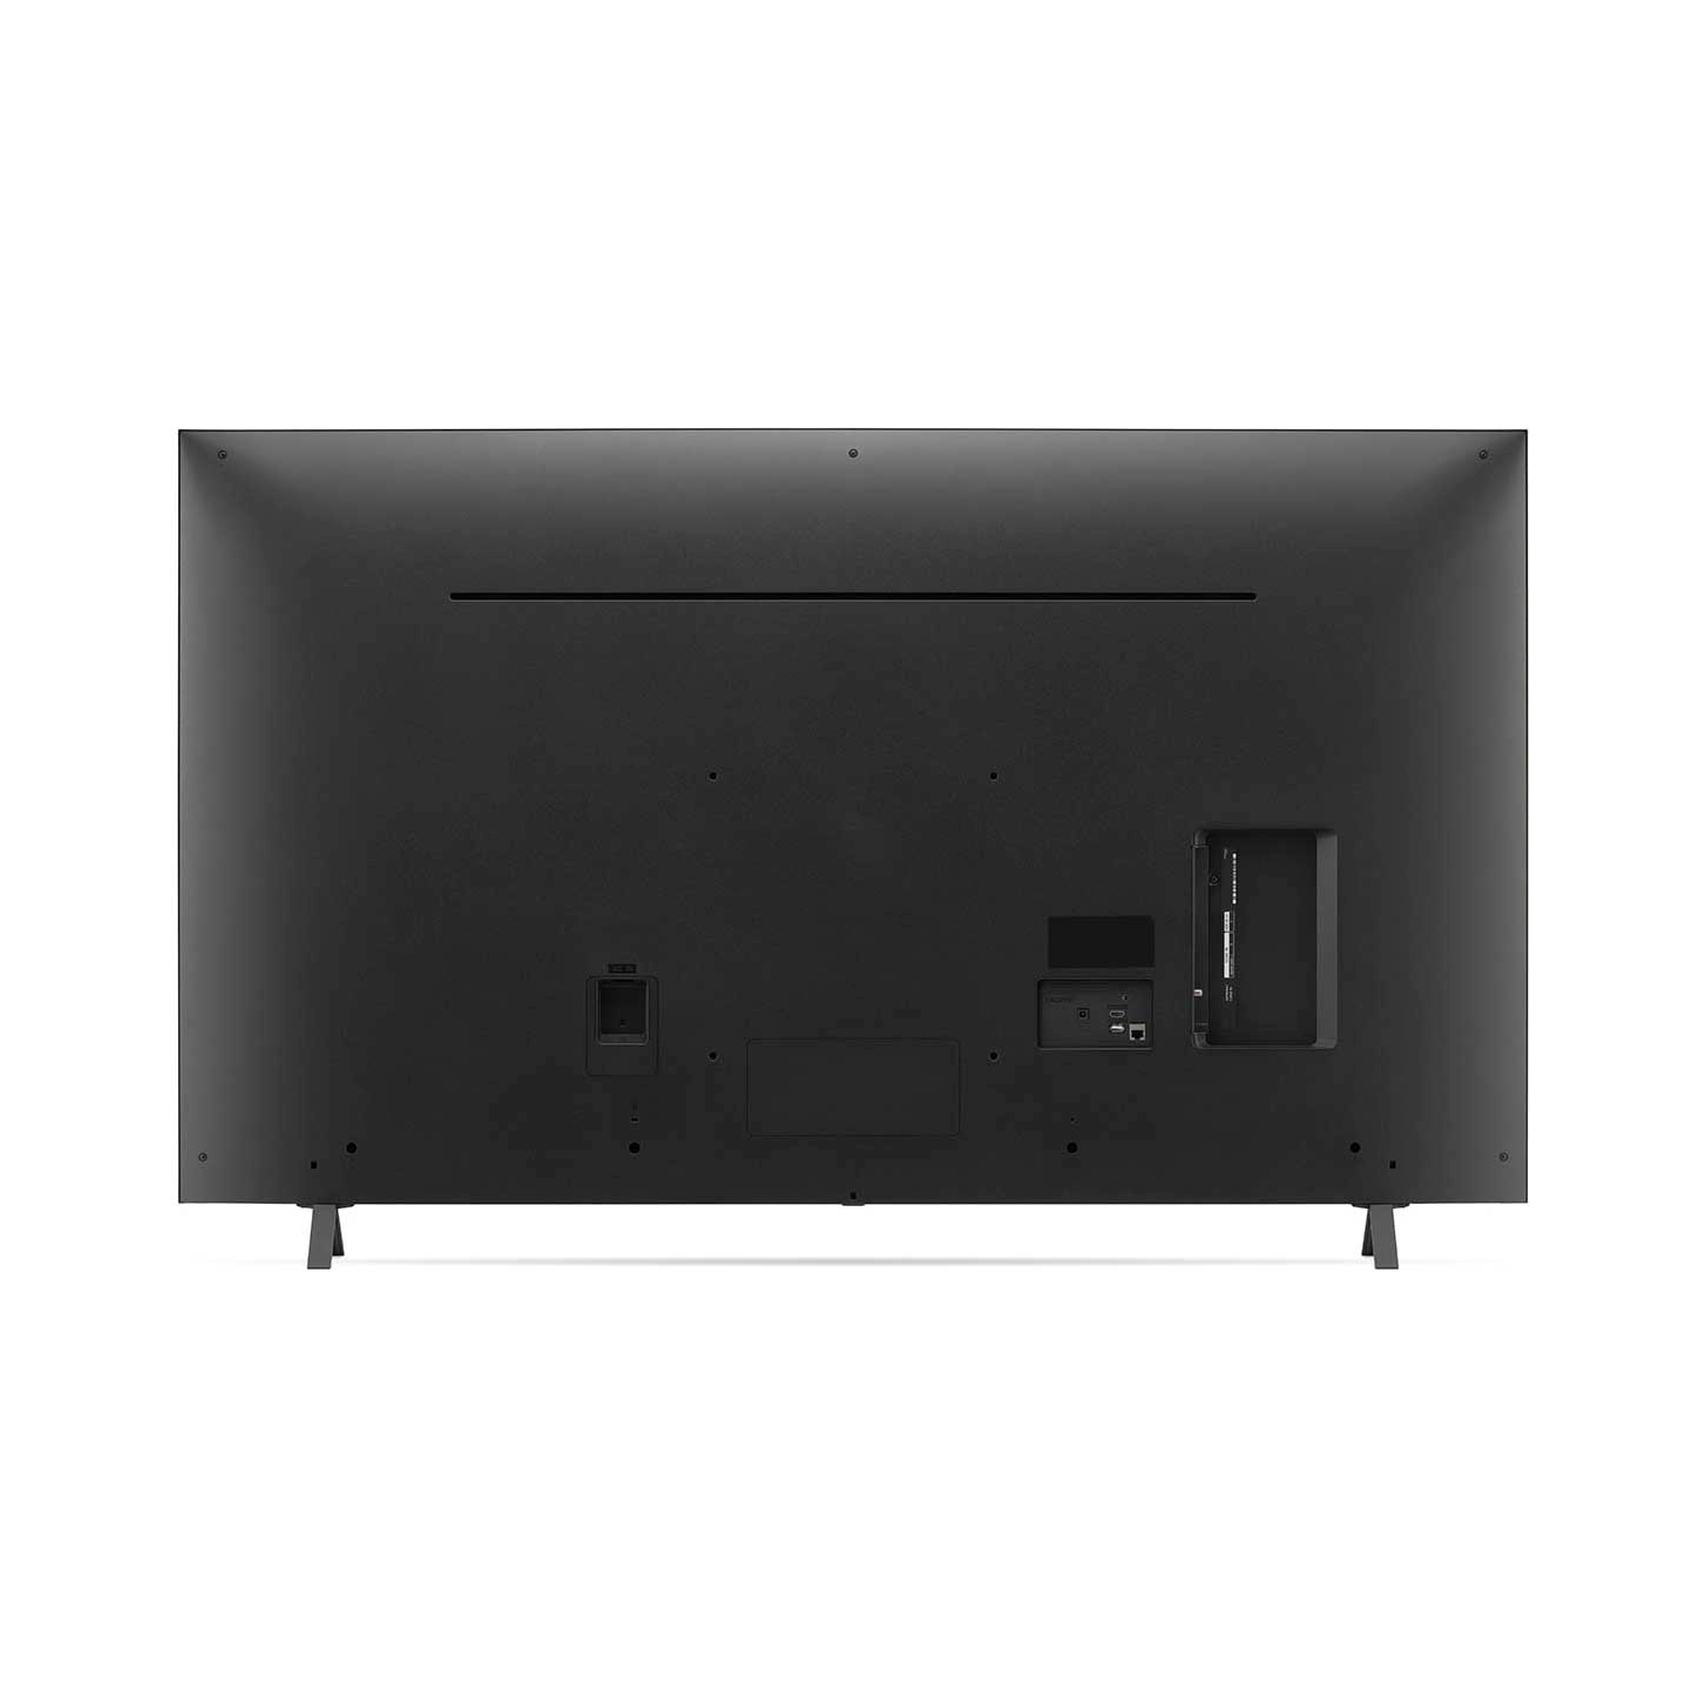 LG UP77 Series 43-Inch UHD 4K LED Smart TV 43UP7750PVB Black